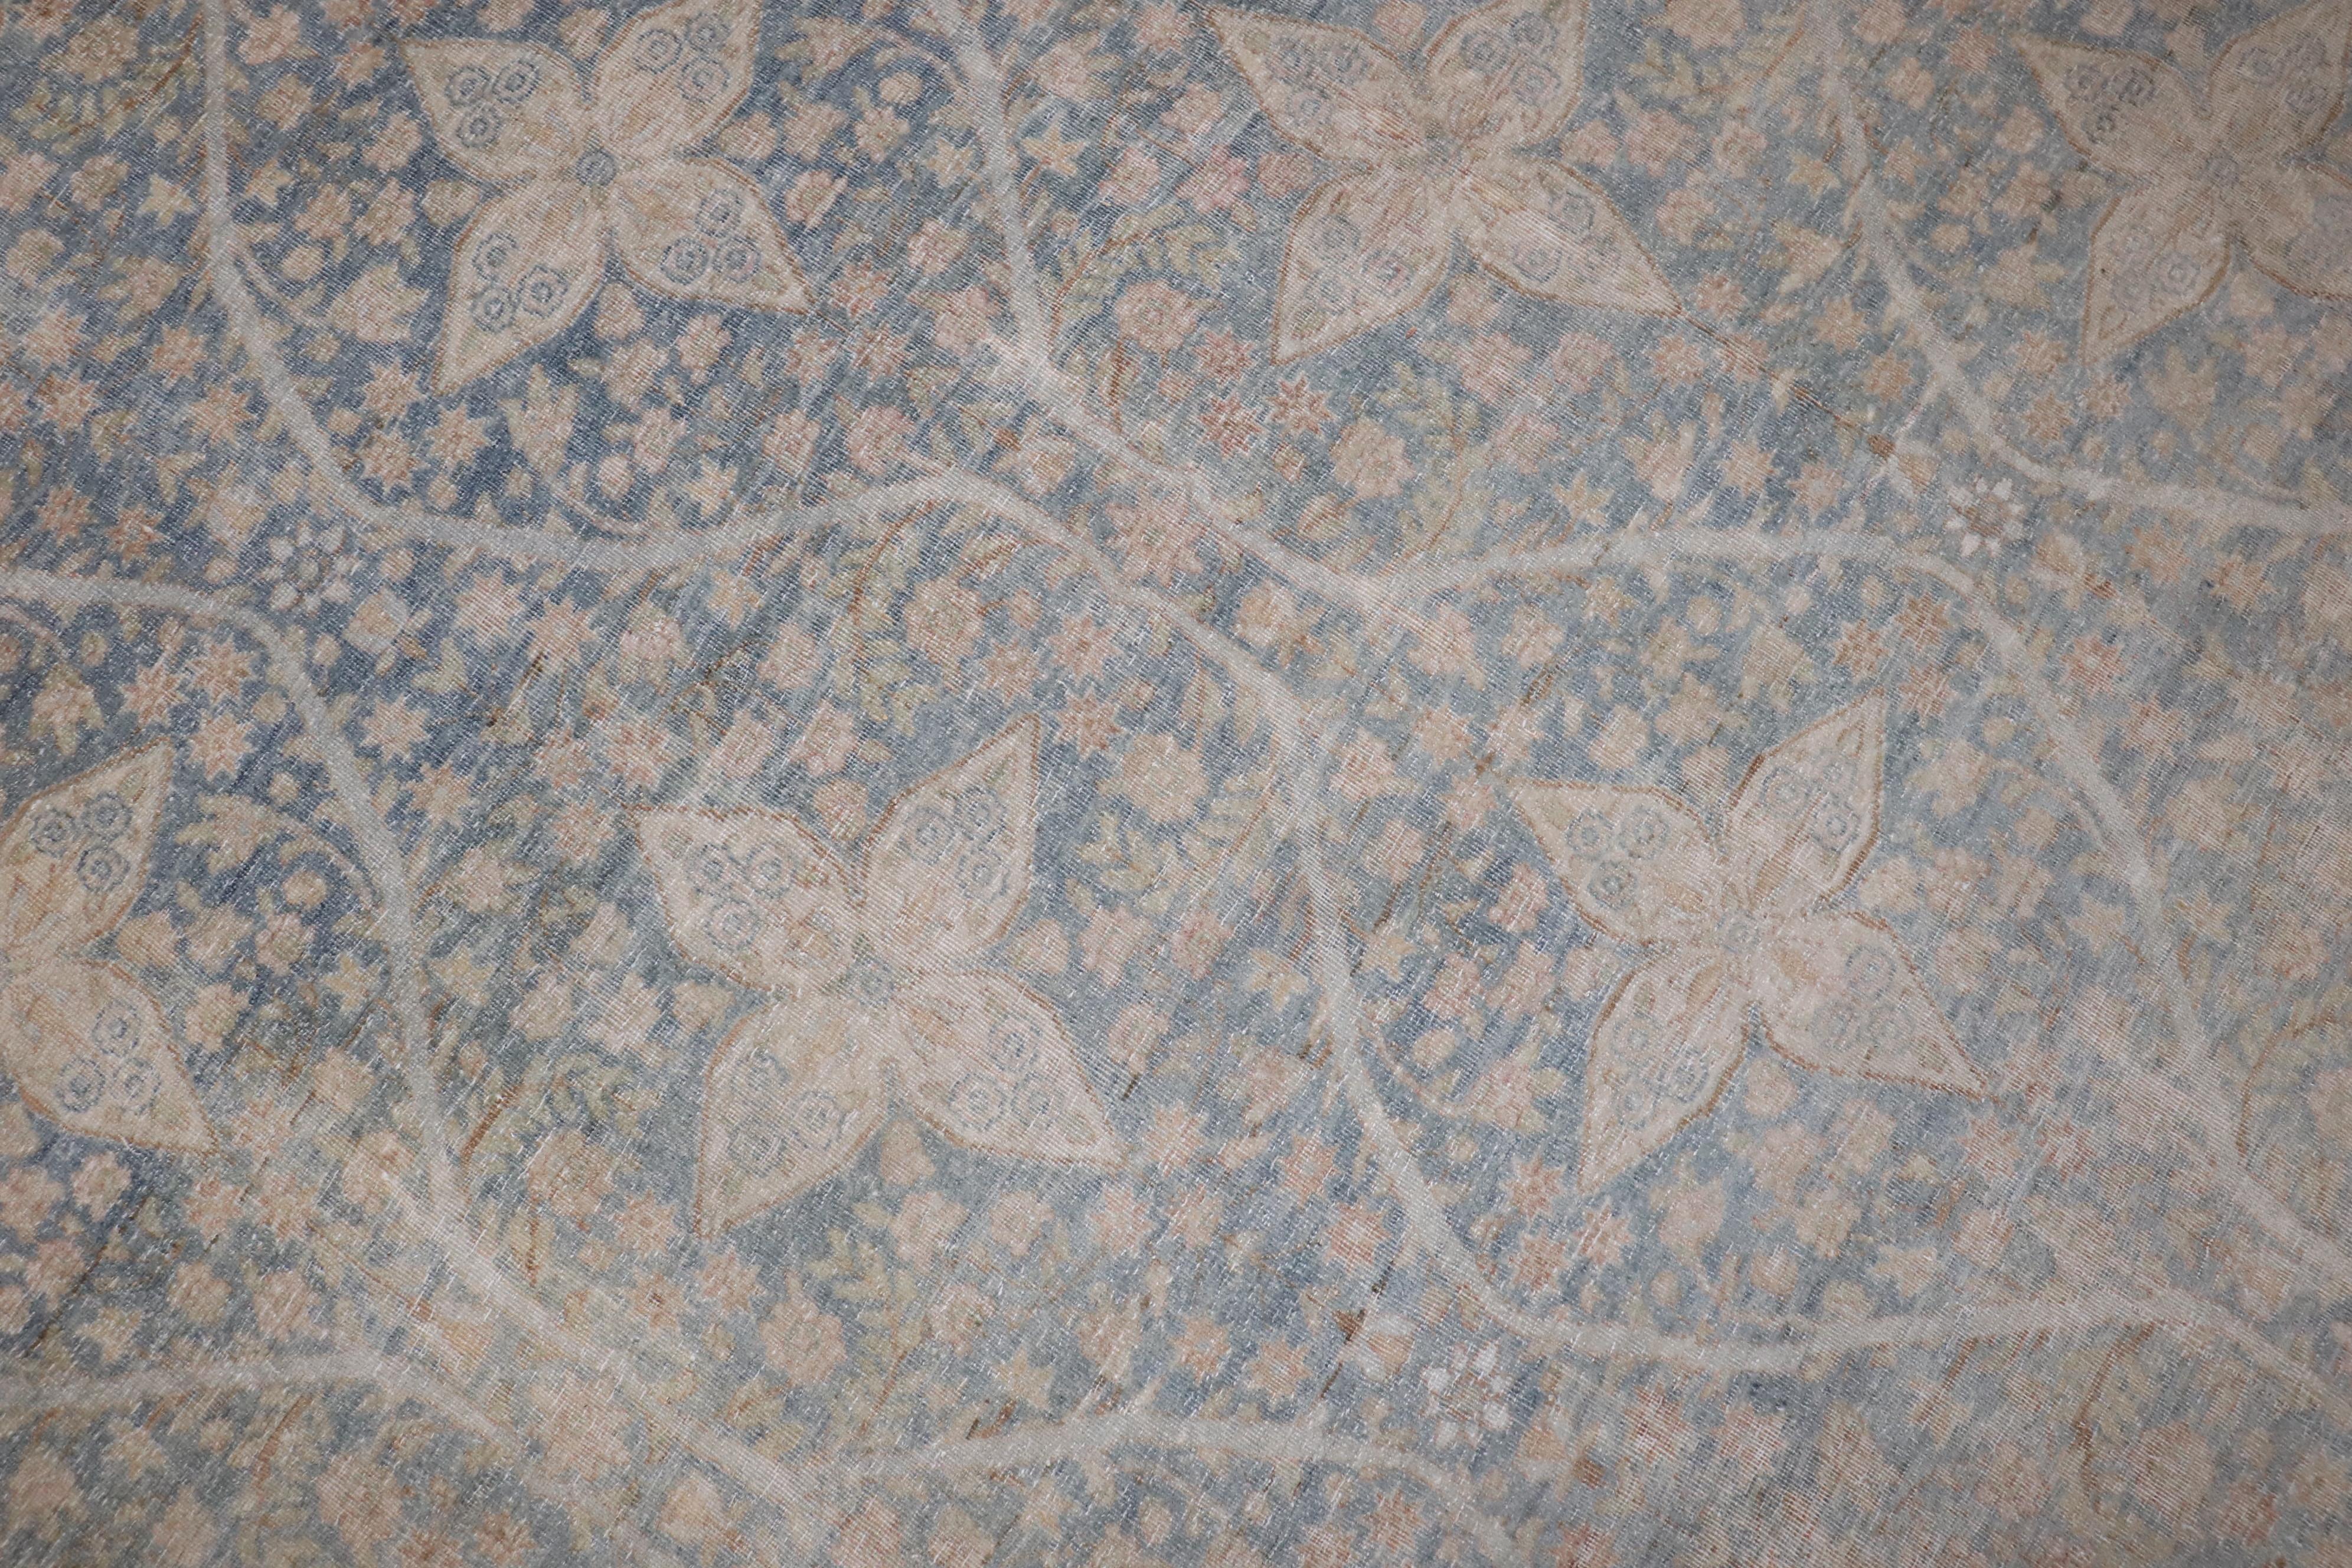 Zabihi Collection Exquisite Oversize Antique Persian Kerman Carpet  For Sale 3